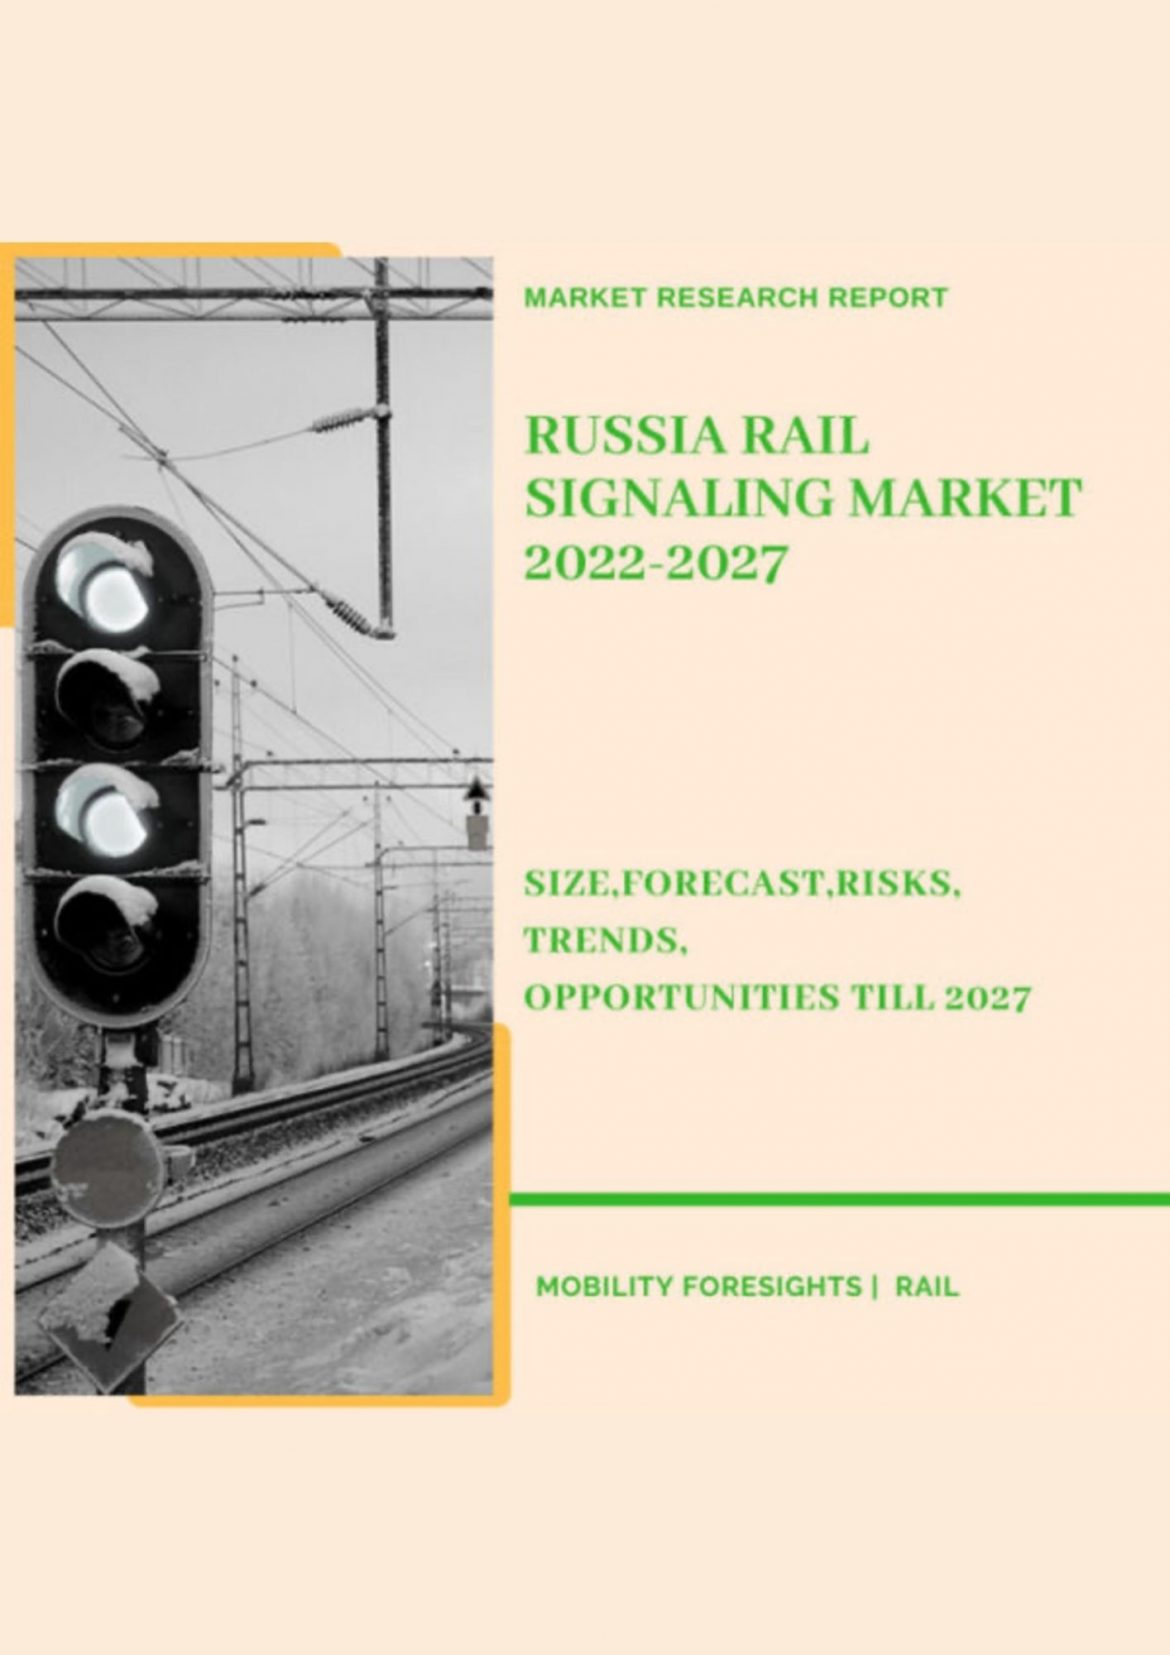 Russia Rail Signaling Market 2022-2027